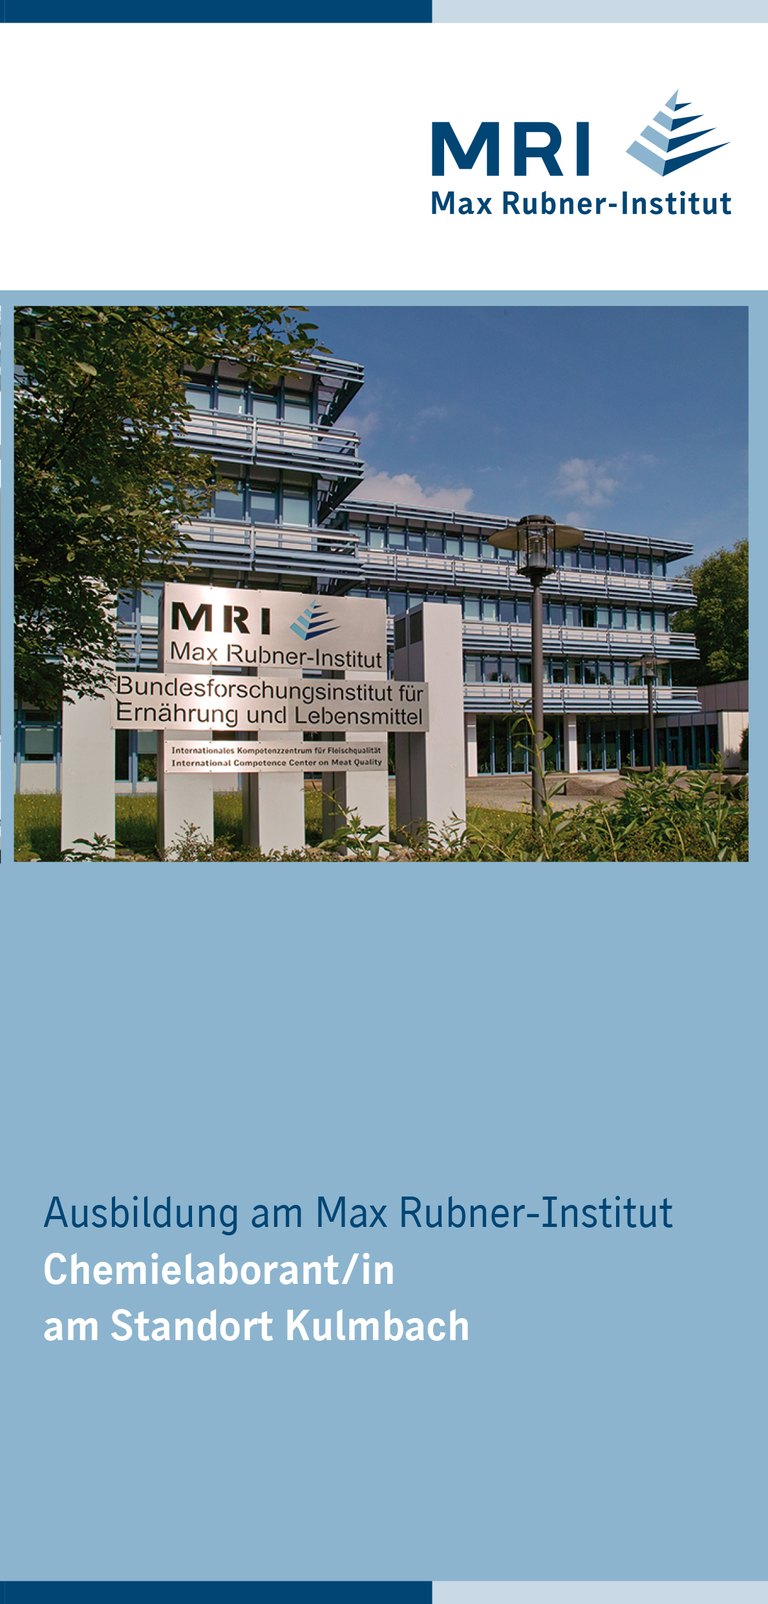 MRI_Flyer_Chemielaborant_KU-8s-web.jpg 